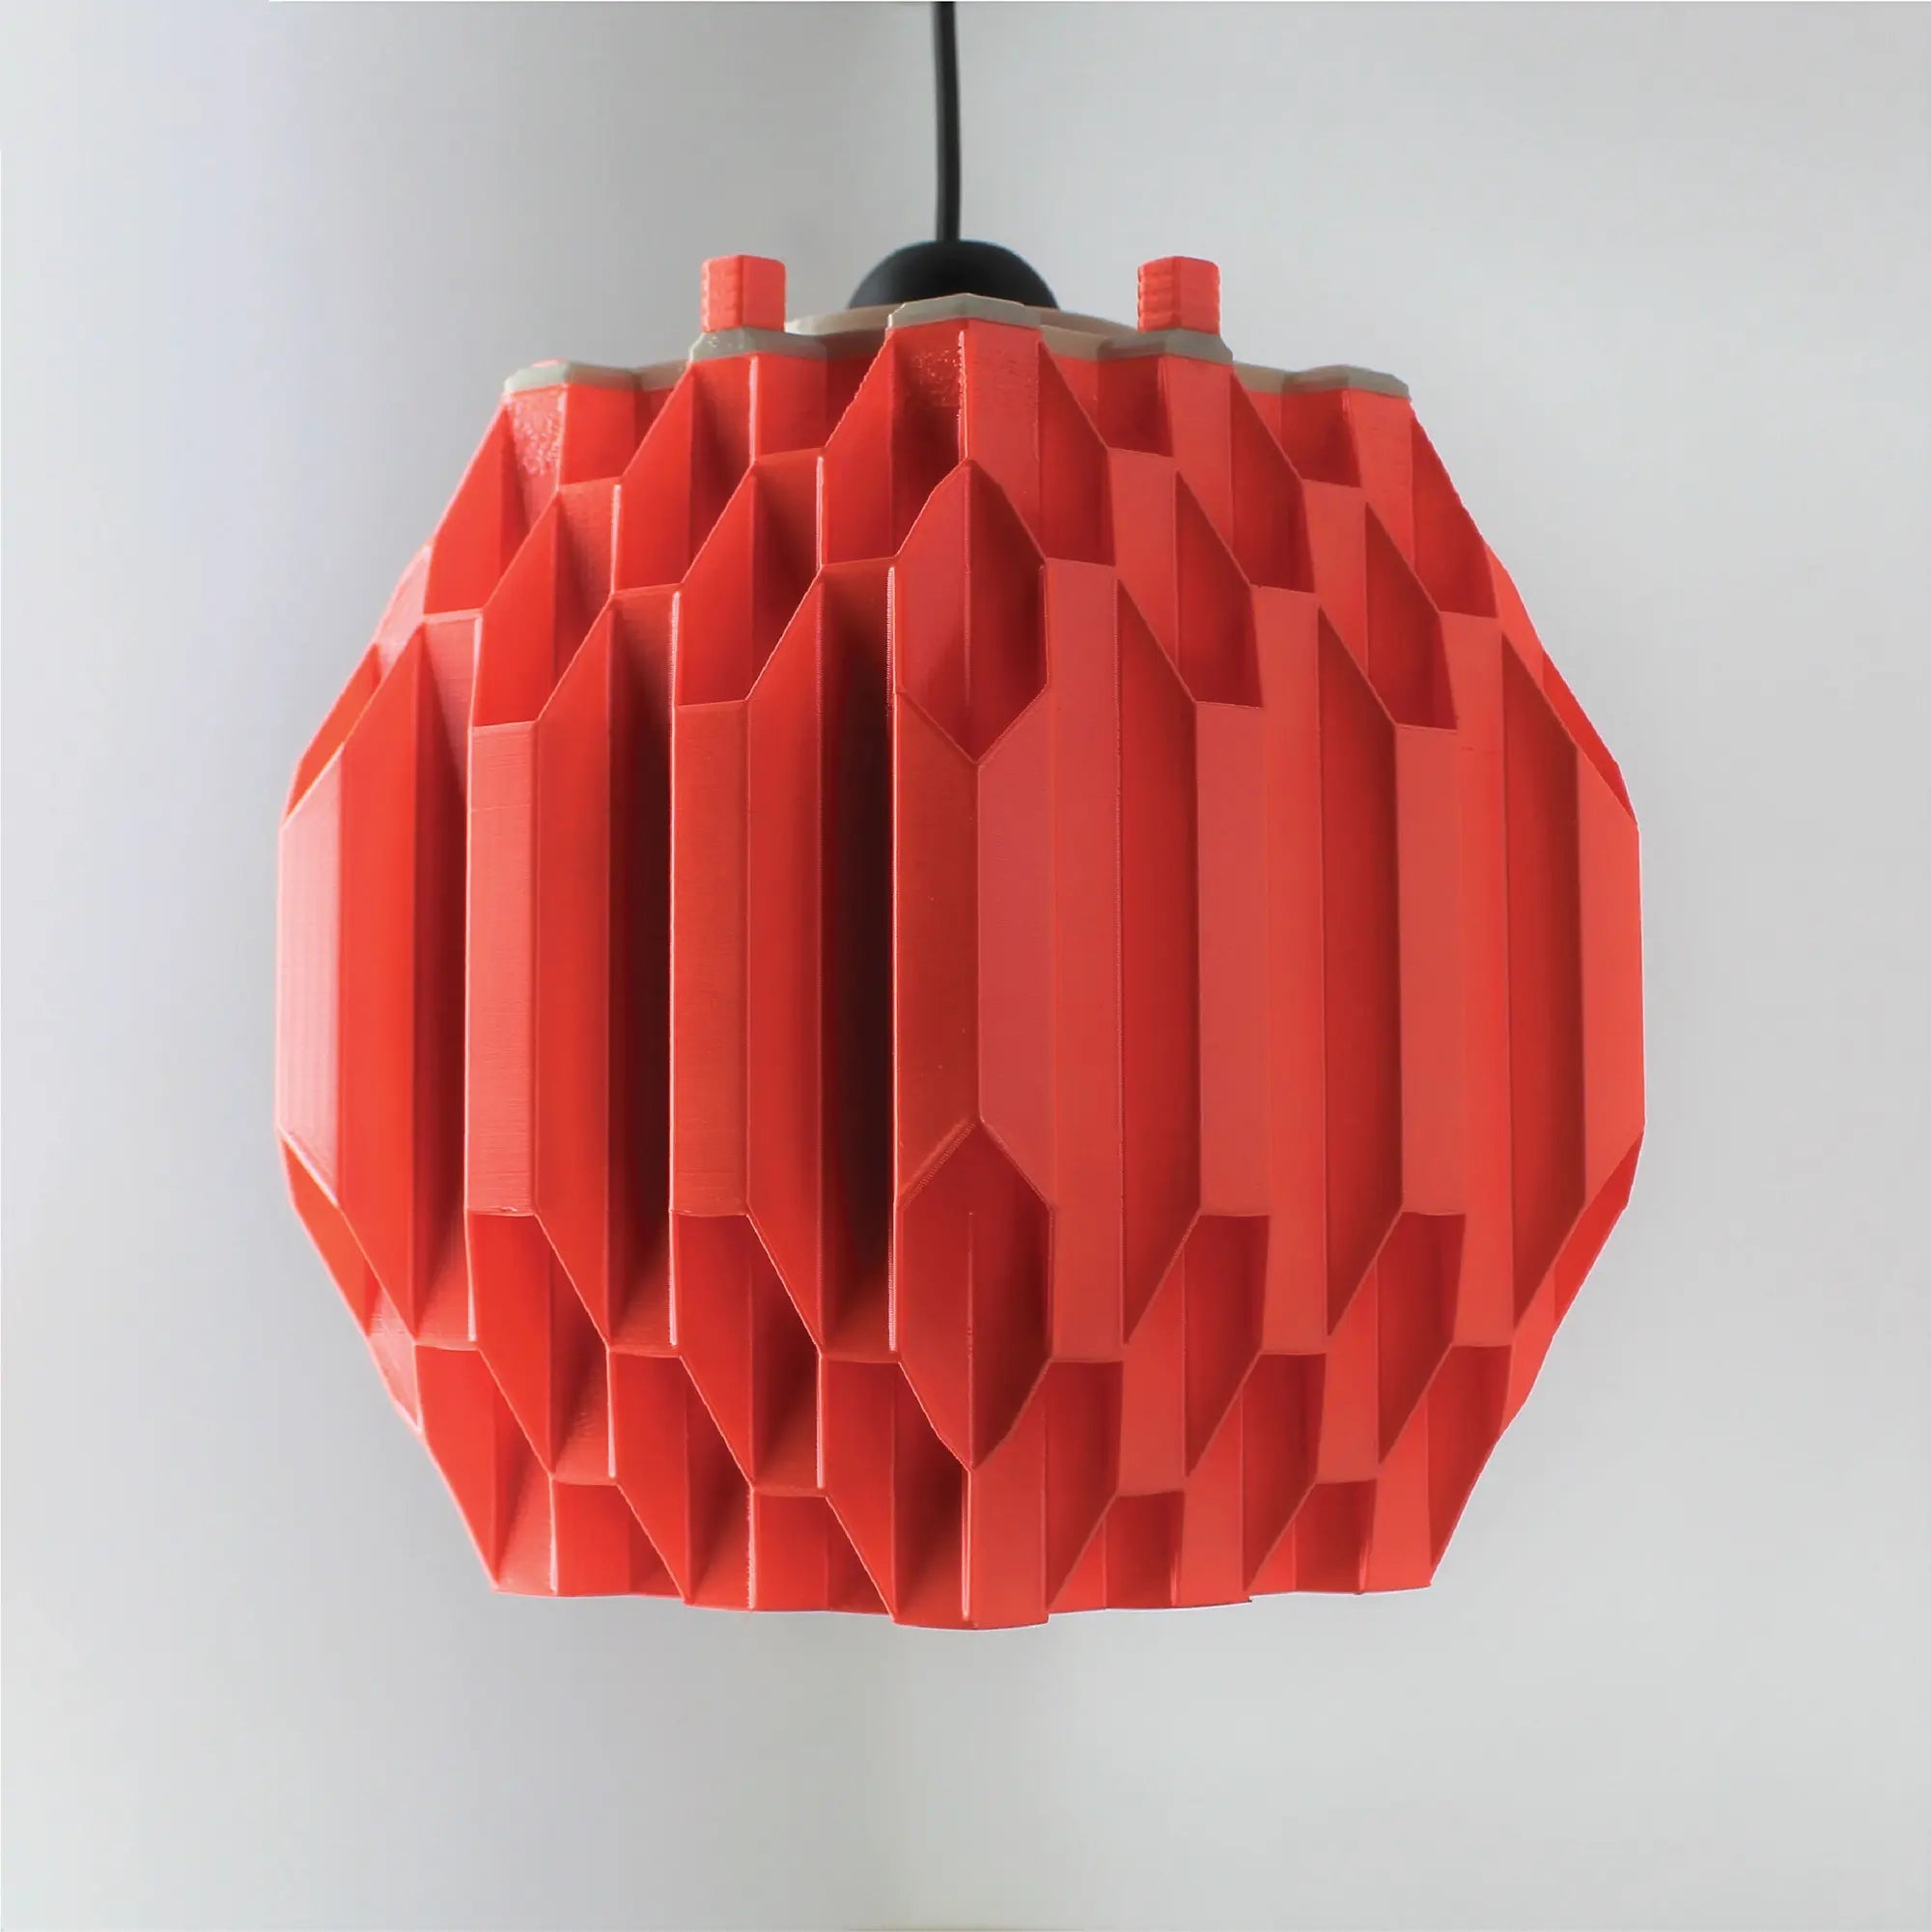 The Hex Overload Lampshade: Modern Geometric Elegance